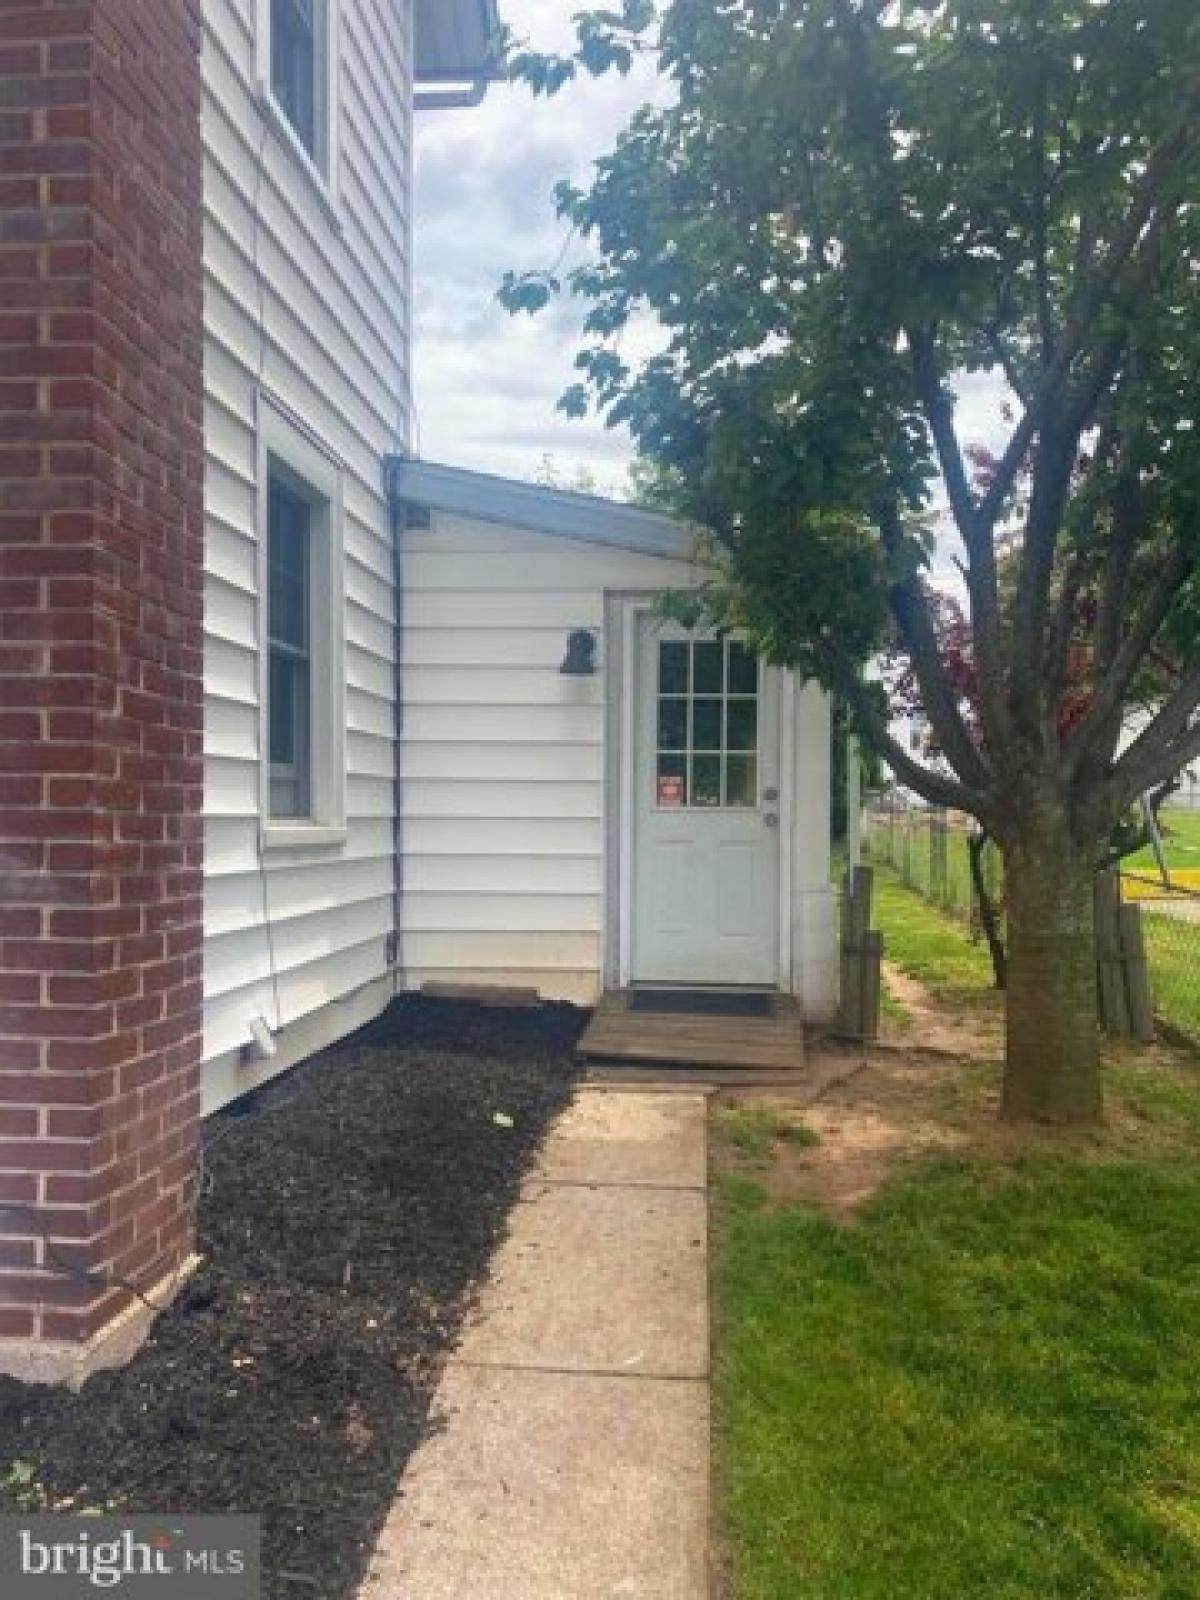 Picture of Home For Sale in Birdsboro, Pennsylvania, United States